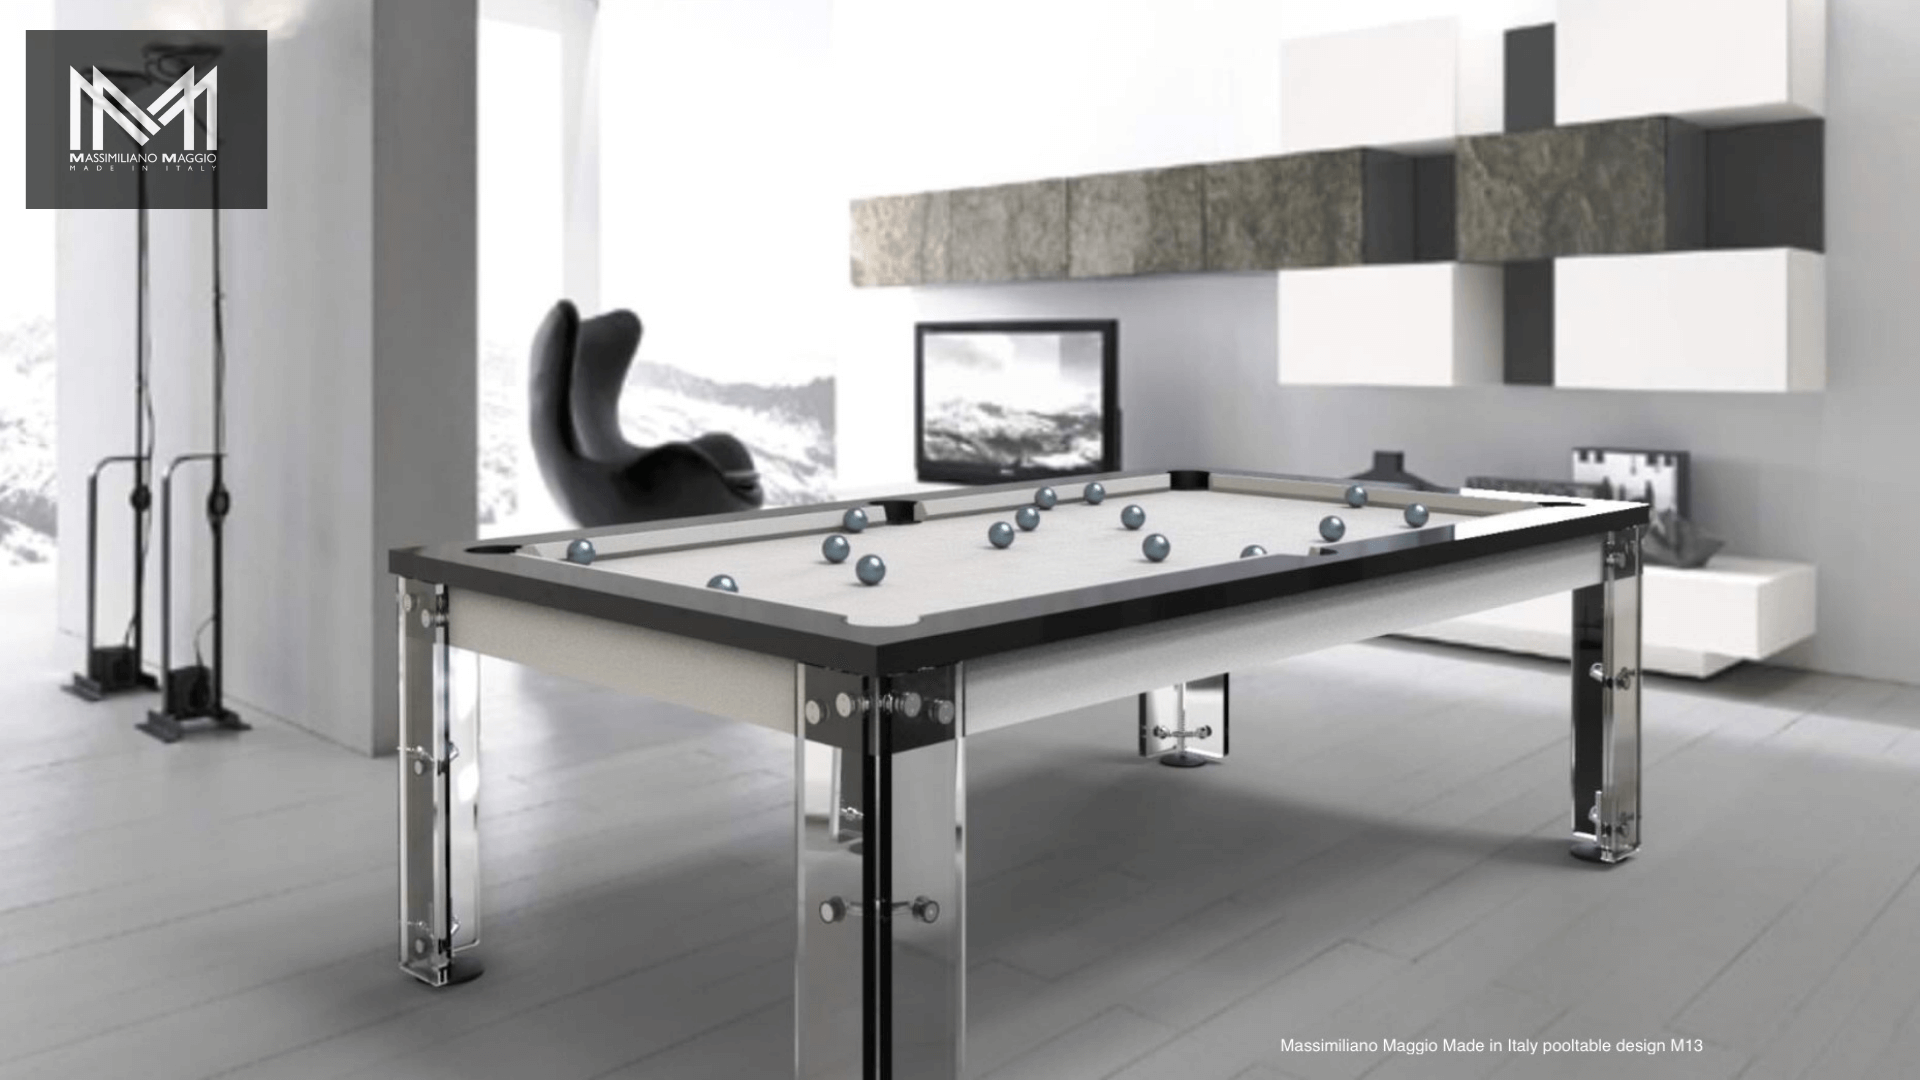 Luxury Pool Table 3 Biliardo M13 Massimiliano Maggio Made in italy Luxury Pool Table design Ziggurat 1 1